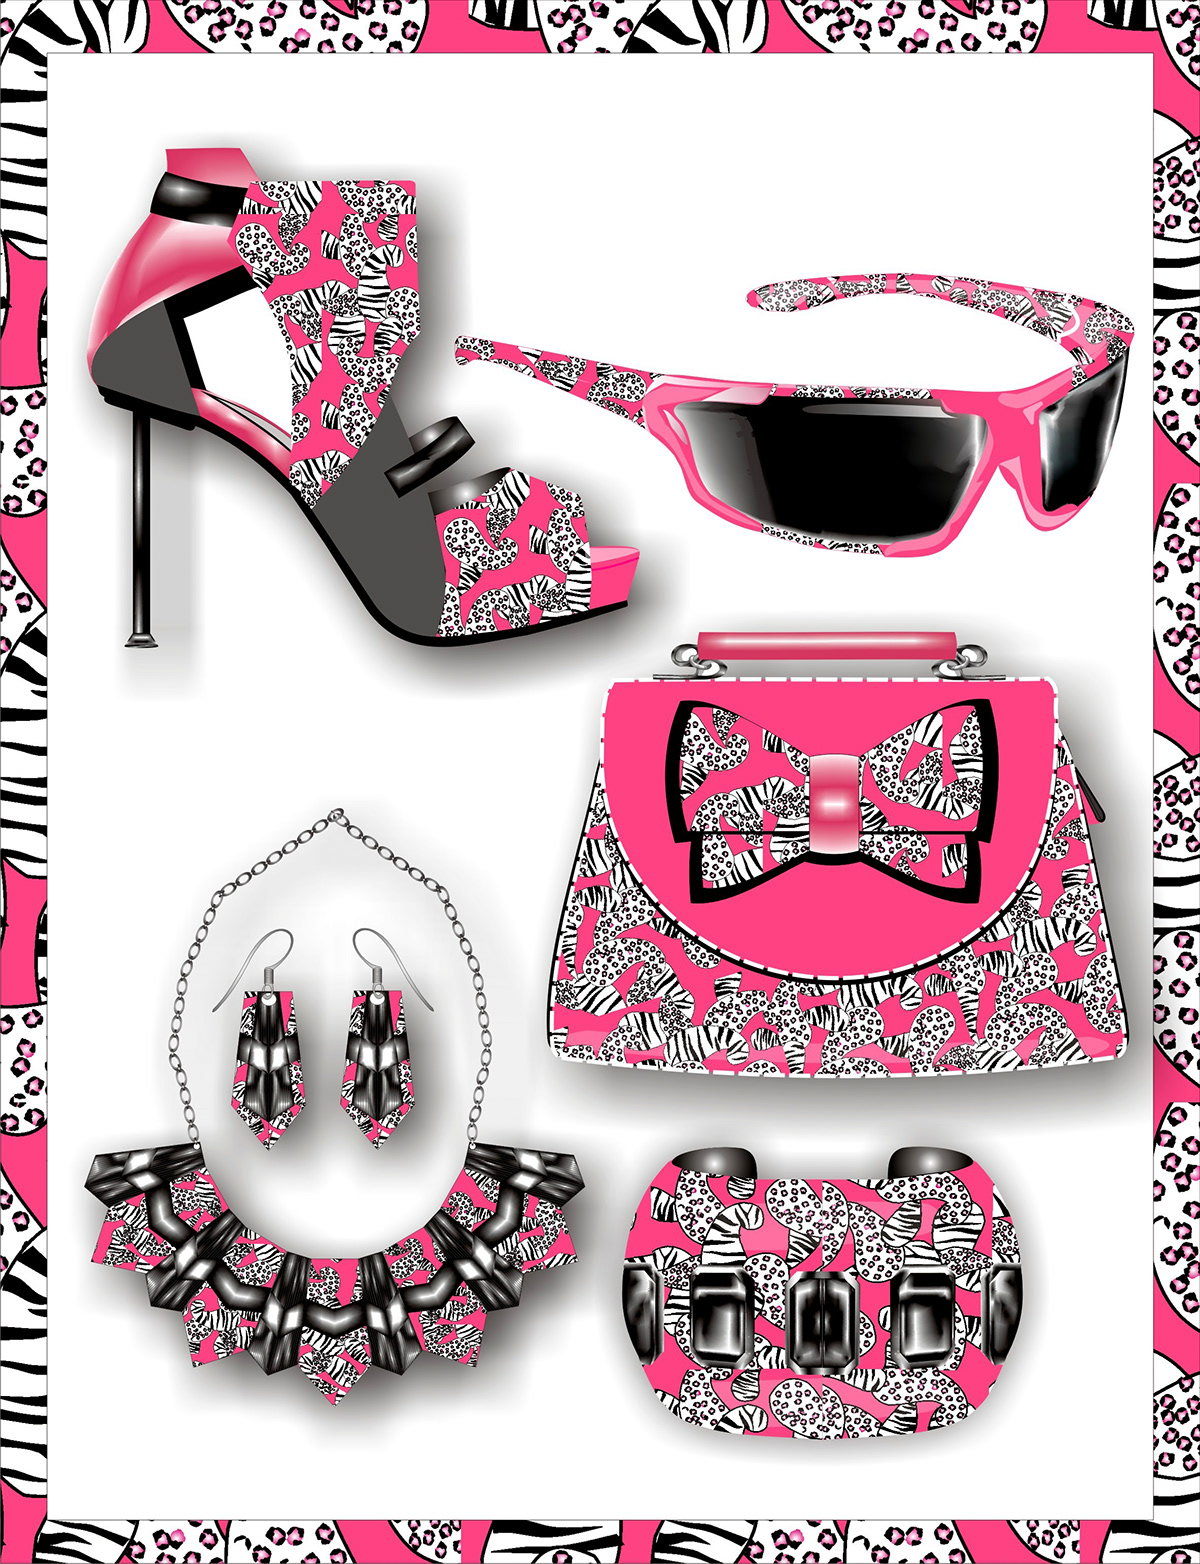 footwear neckpiece handbag surfaceornamentation Sunglasses bracelet print zebraprint leopard print Corel Draw